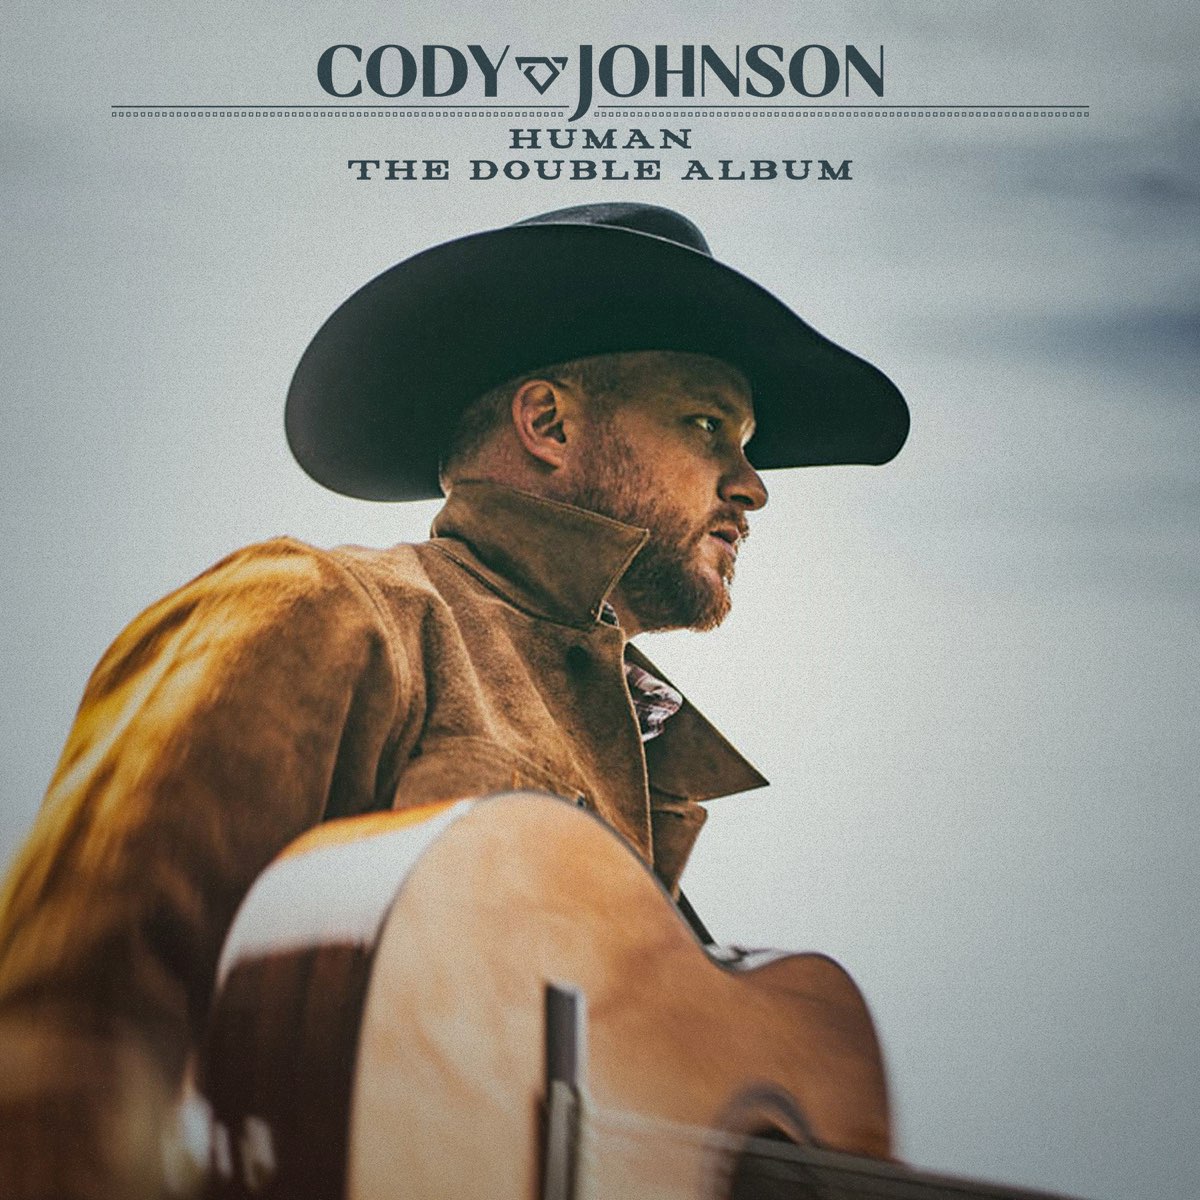 ‎Human: The Double Album - Album by Cody Johnson - Apple Music